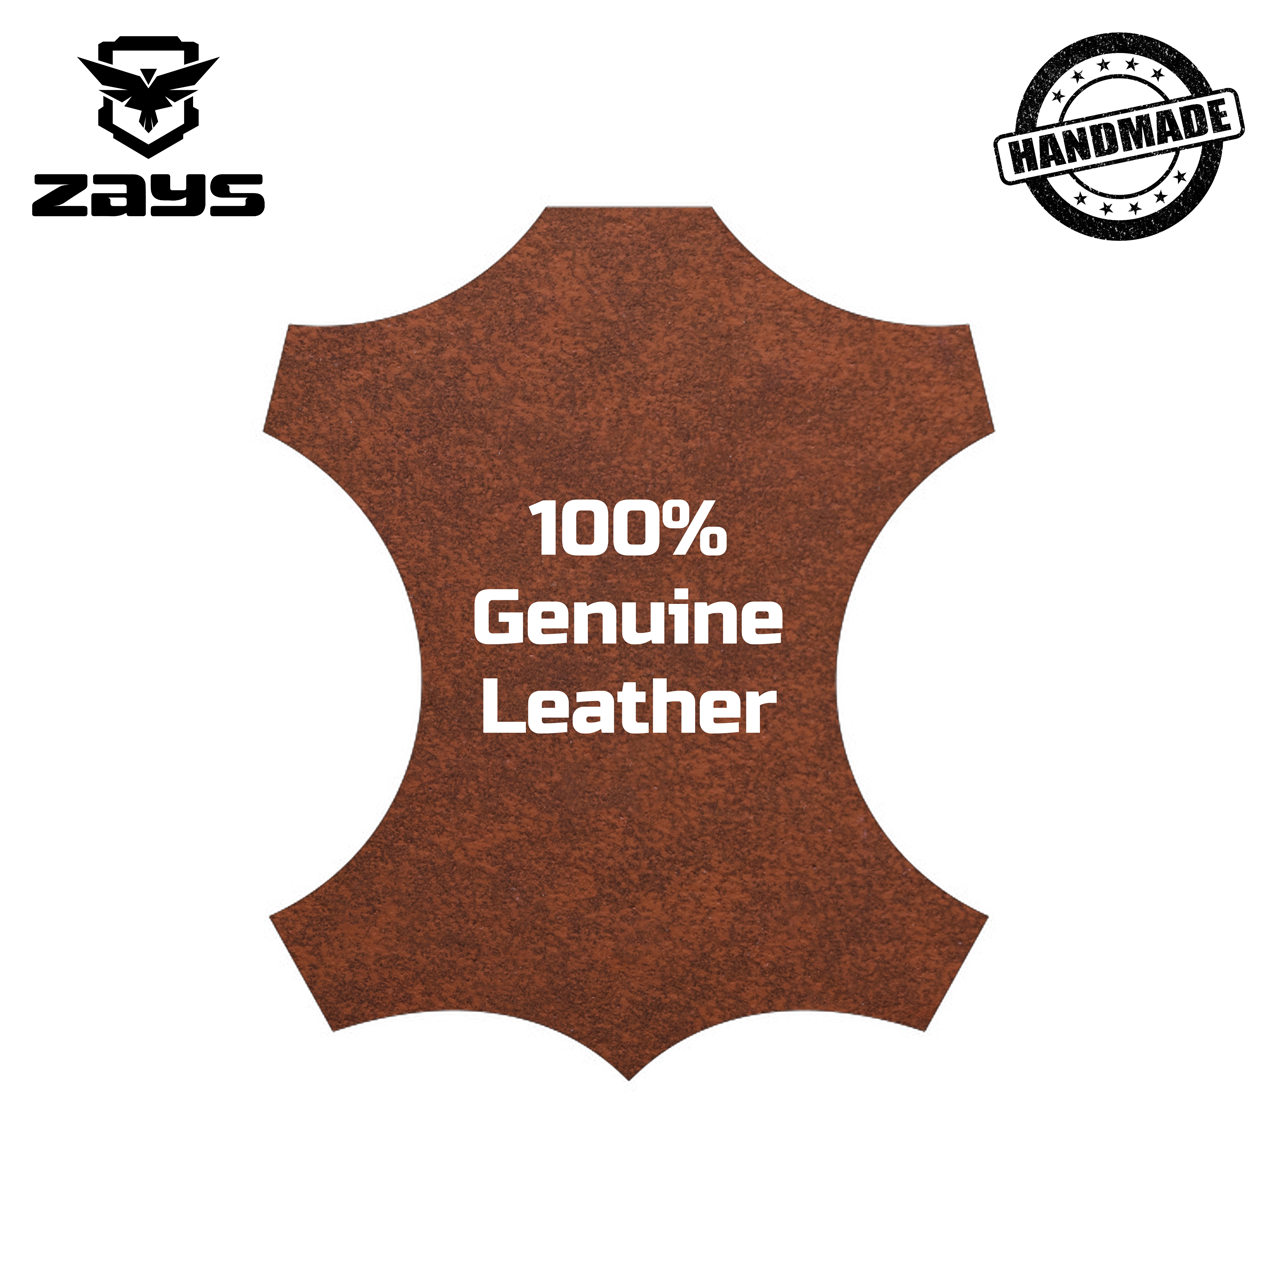 Zays Leather Premium Loafer For Men (Brown)- ZAYSSF31